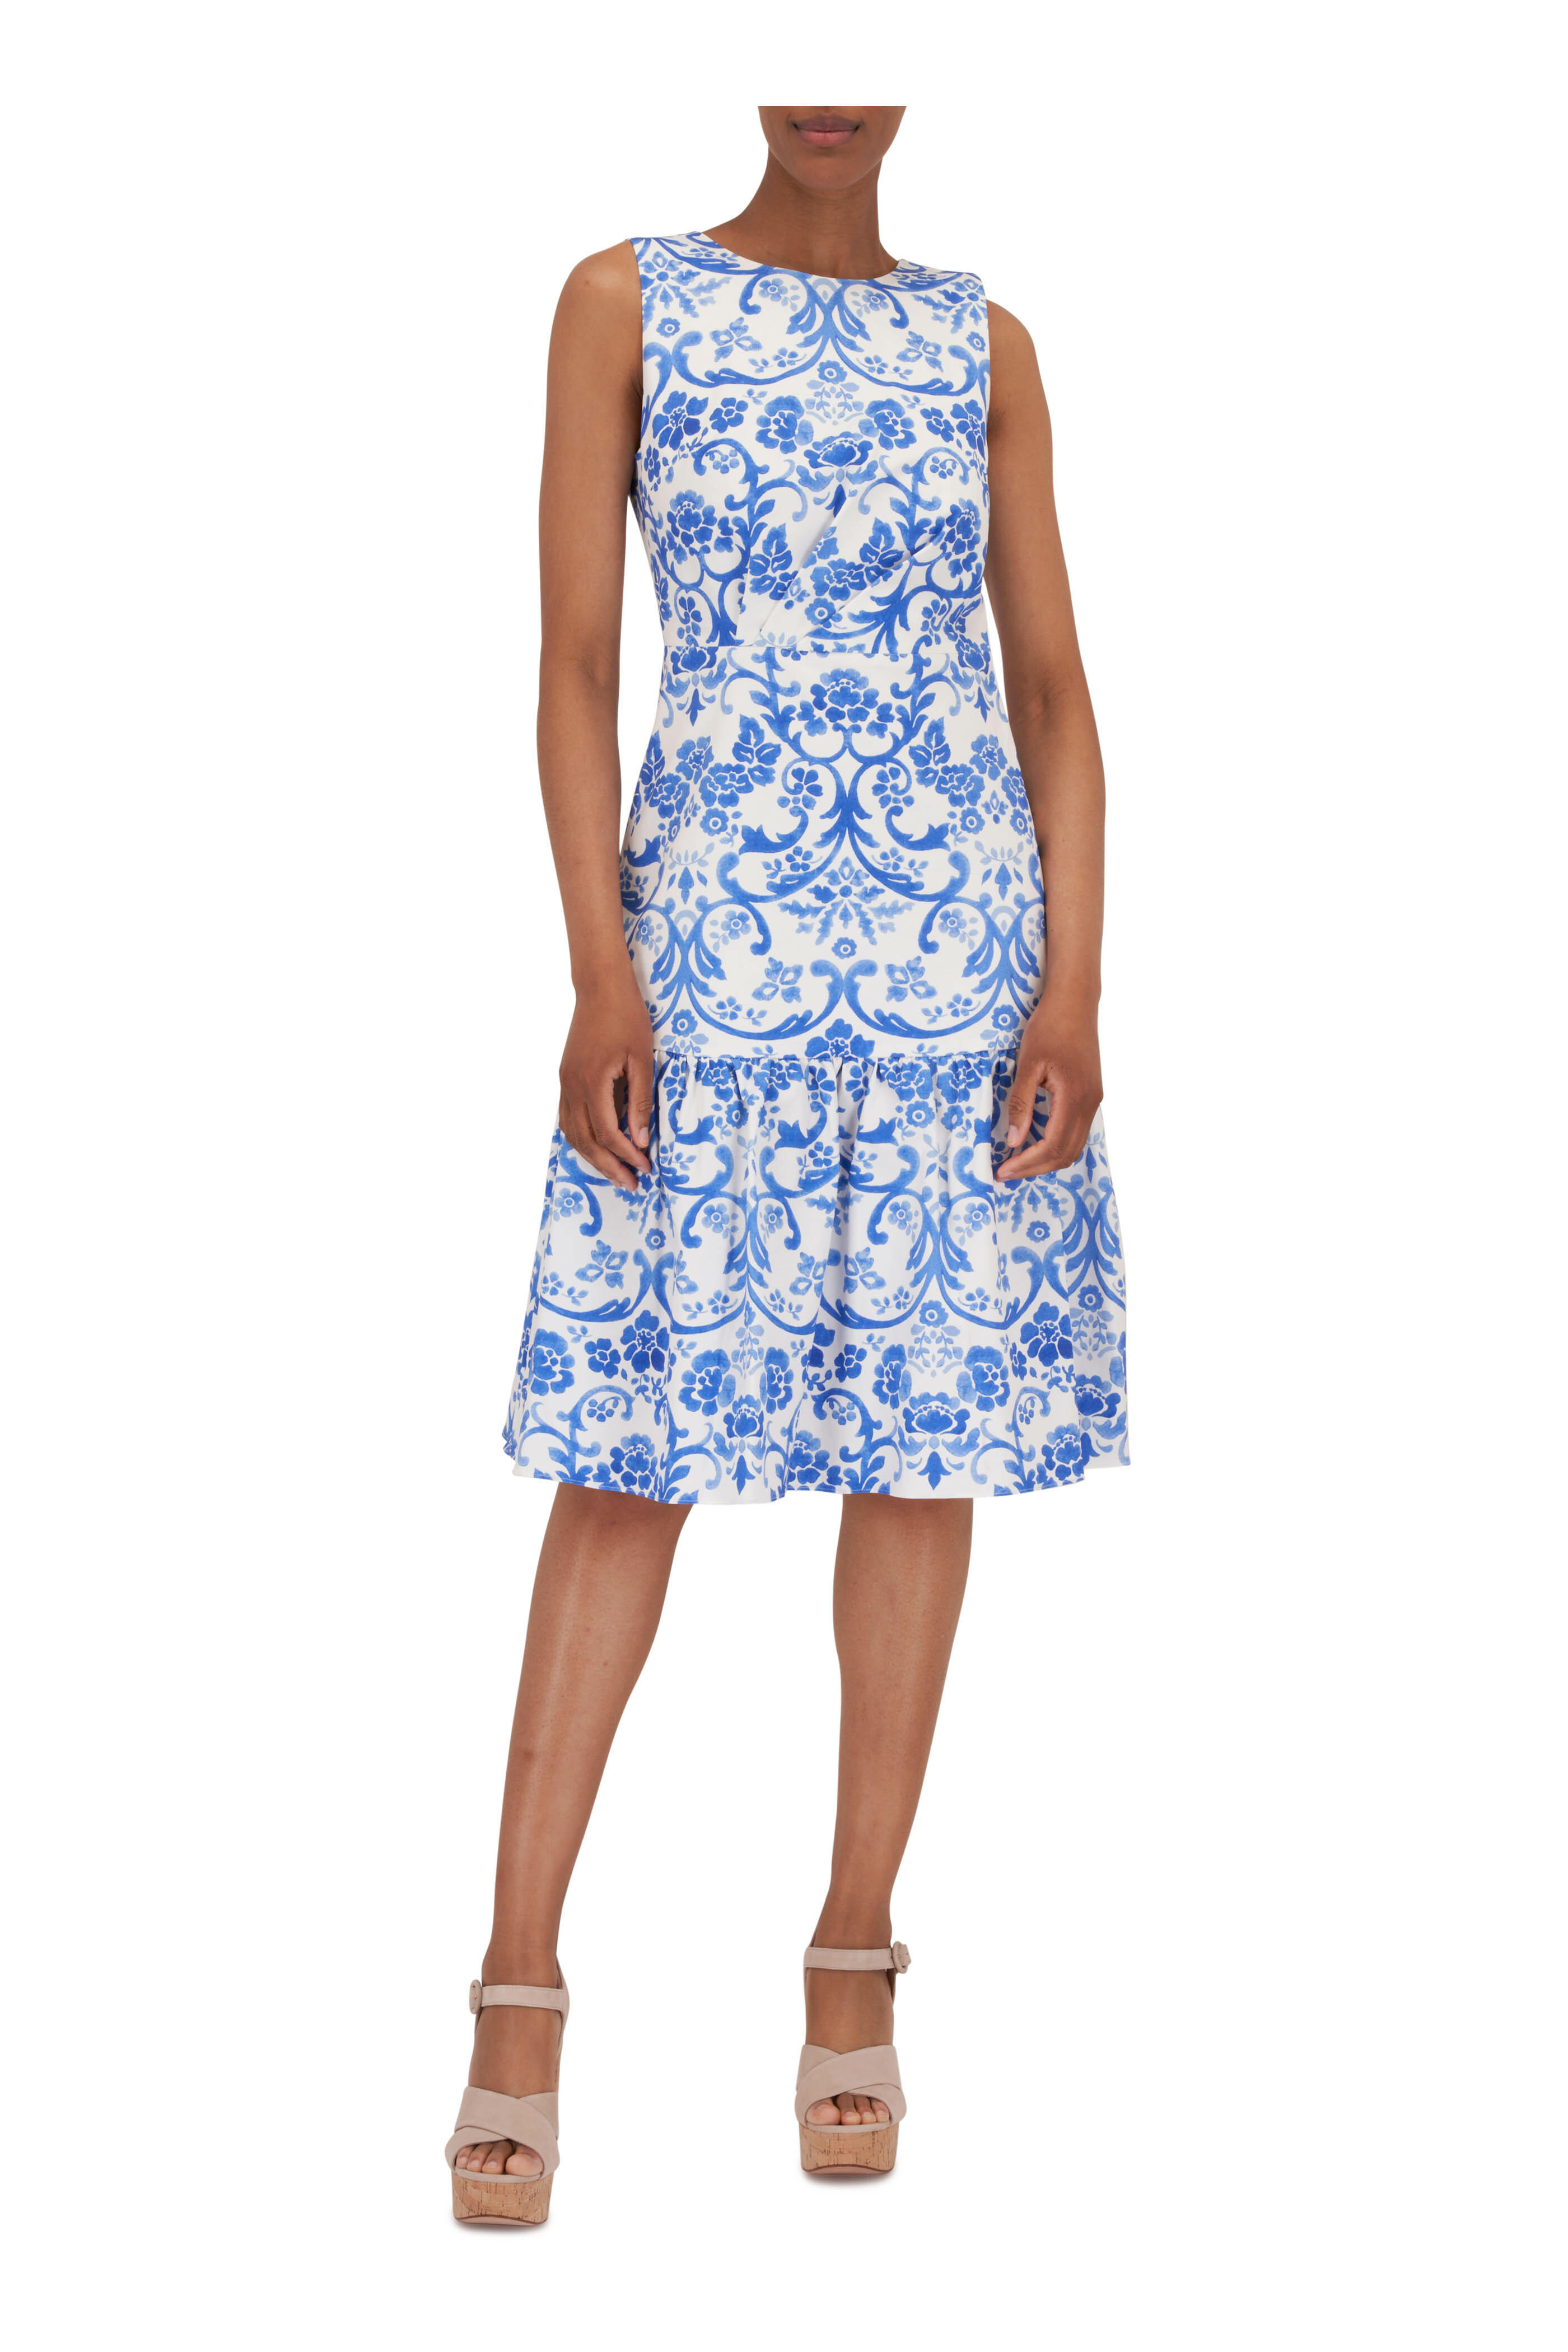 Carolina Herrera - Blue & White Floral Ruffle Hem Dress